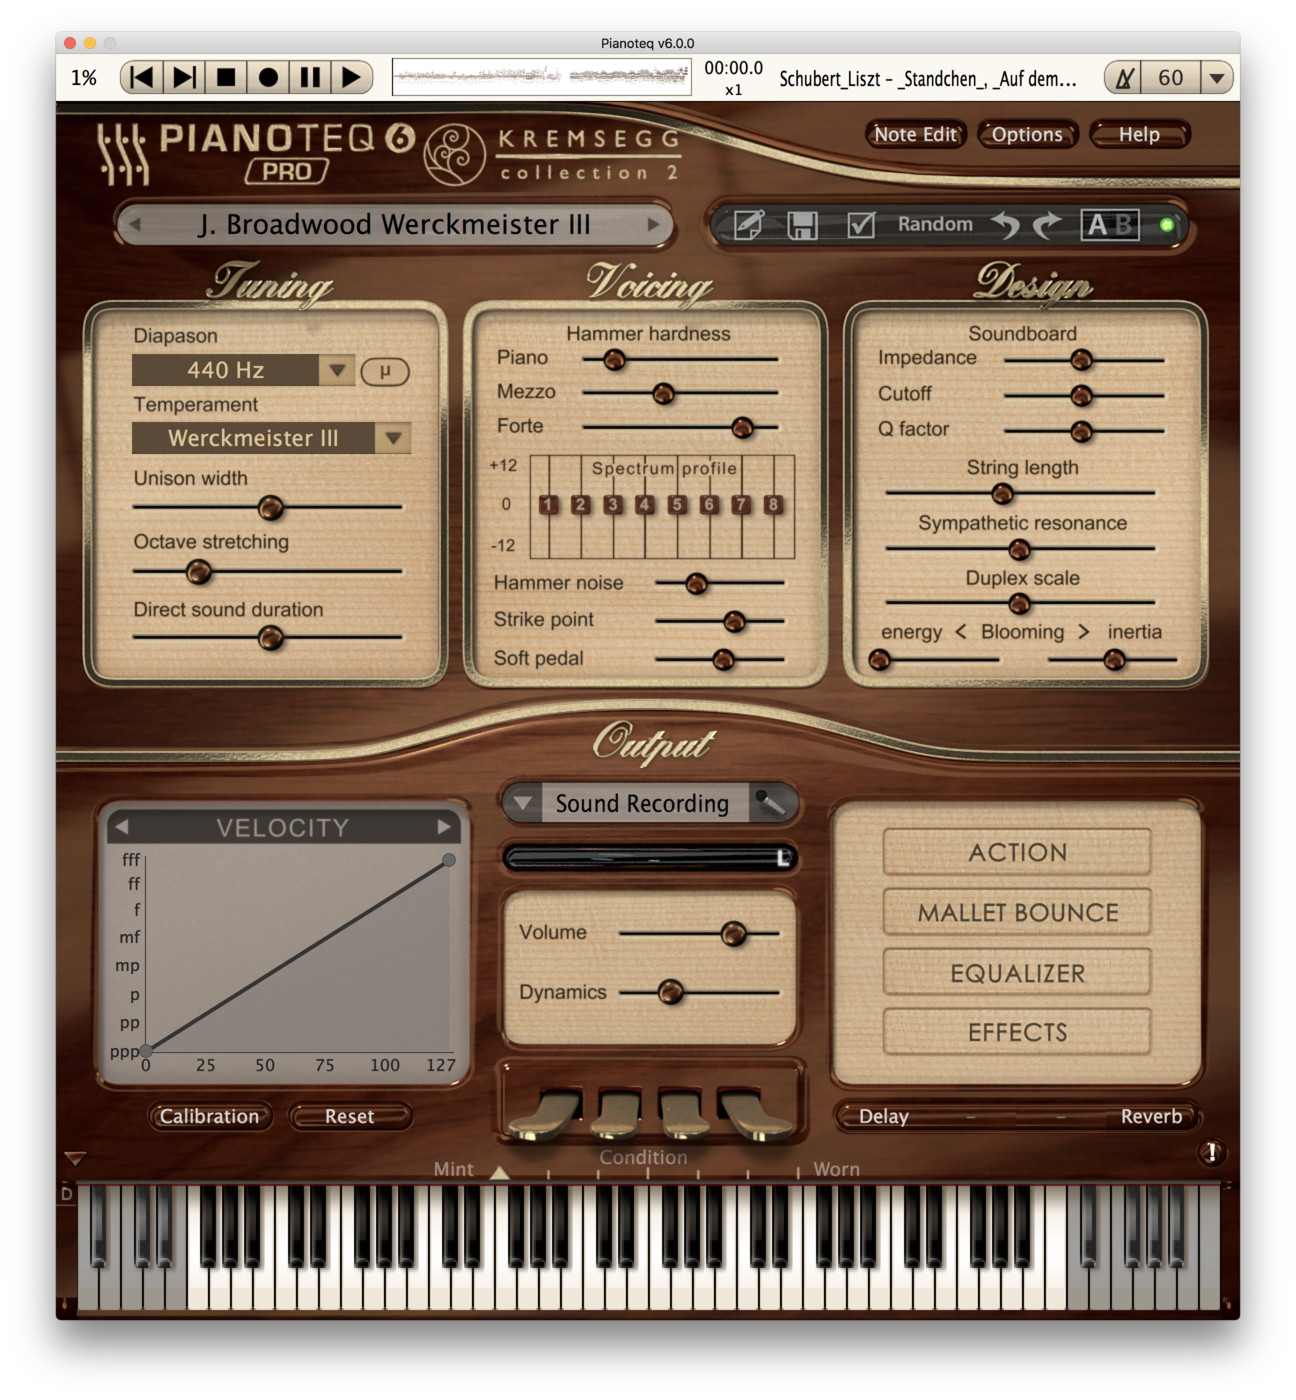 Kremsegg Historical Piano Collection 1